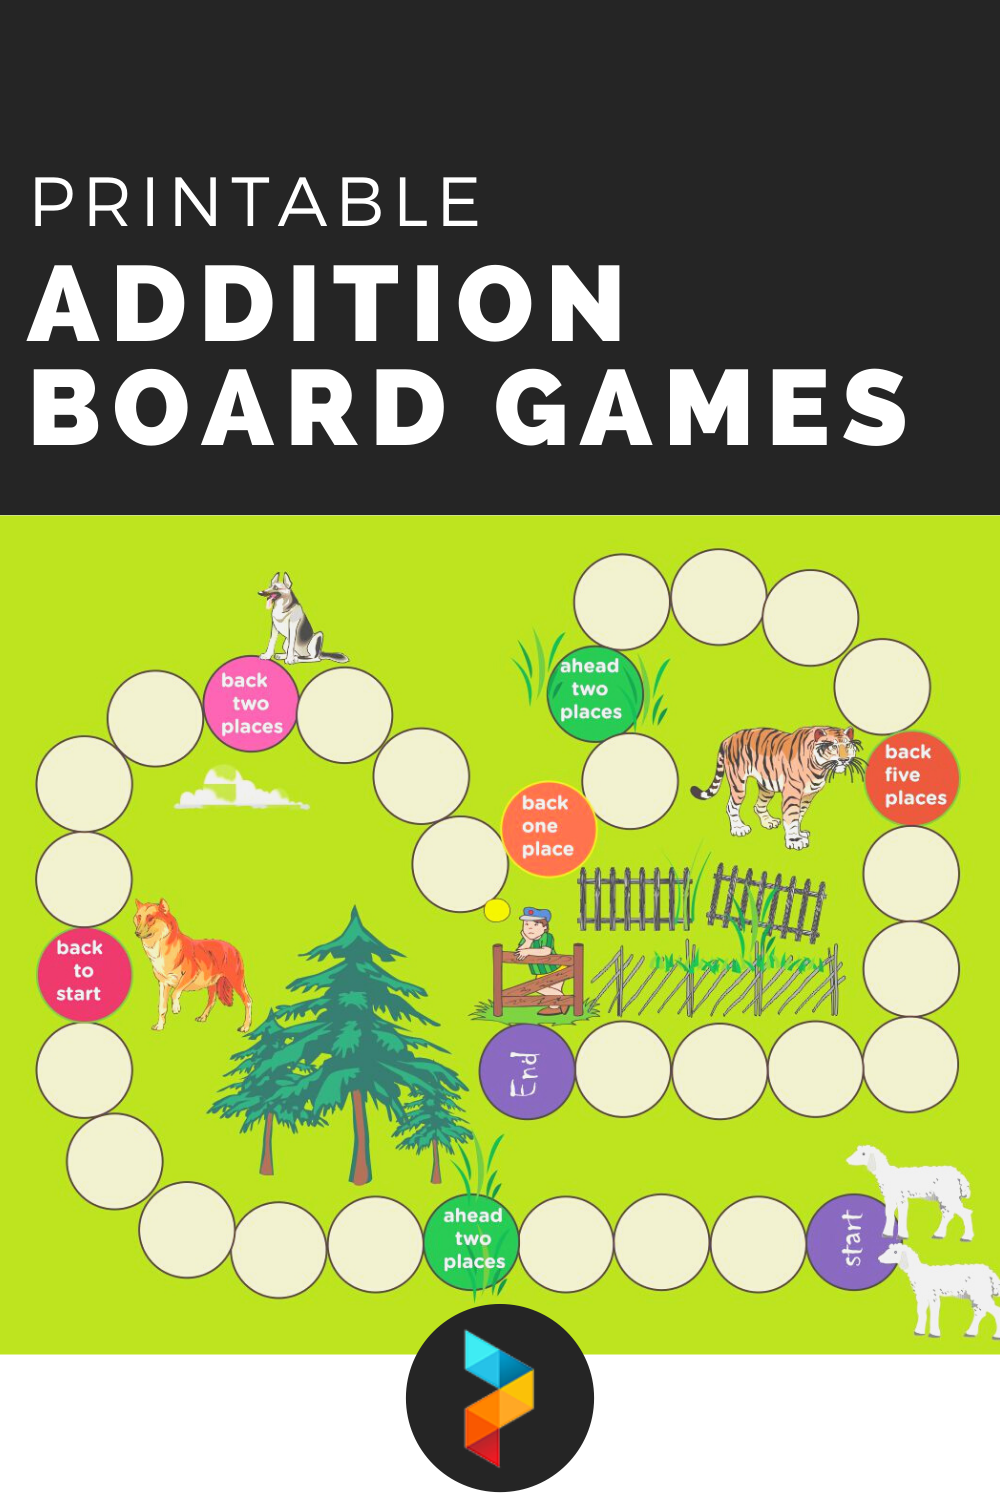 Printable Addition Board Games